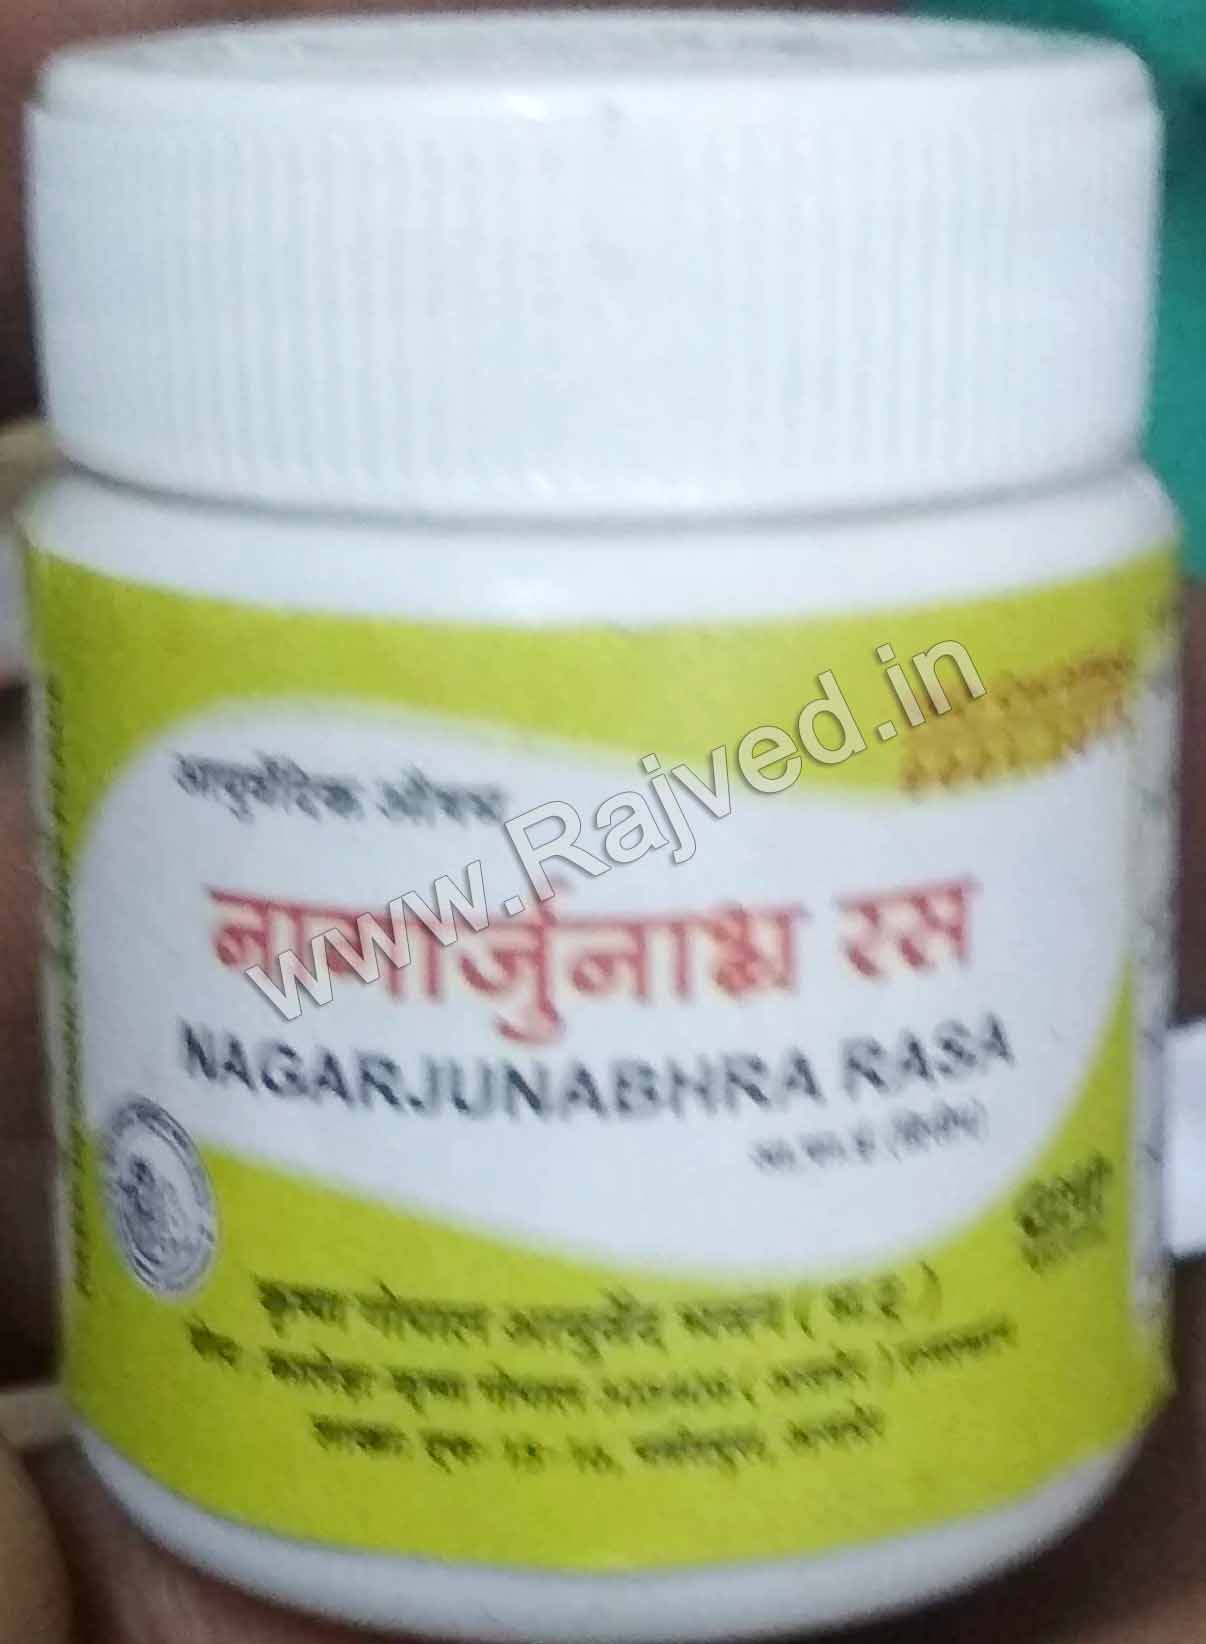 nagarjunabhra ras 5gm upto 20% off krishna gopal ayurved bhavan